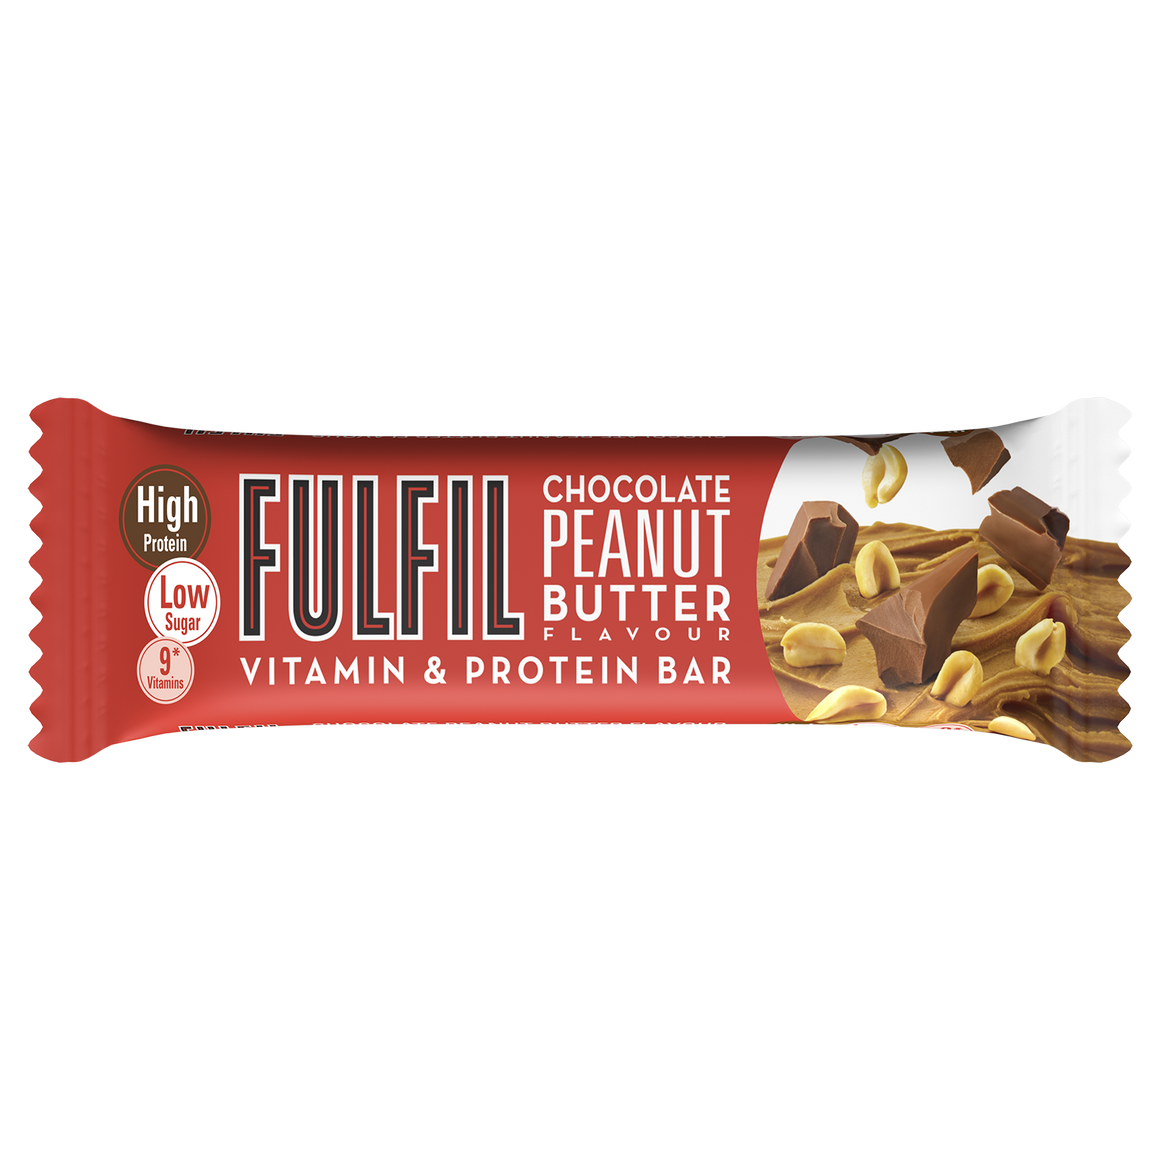 Fulfil Chocolate Peanut Butter Flavour - Vitamin & Protein Bar,Low Sugar, High Protein, 9 Vitamins, 55gm